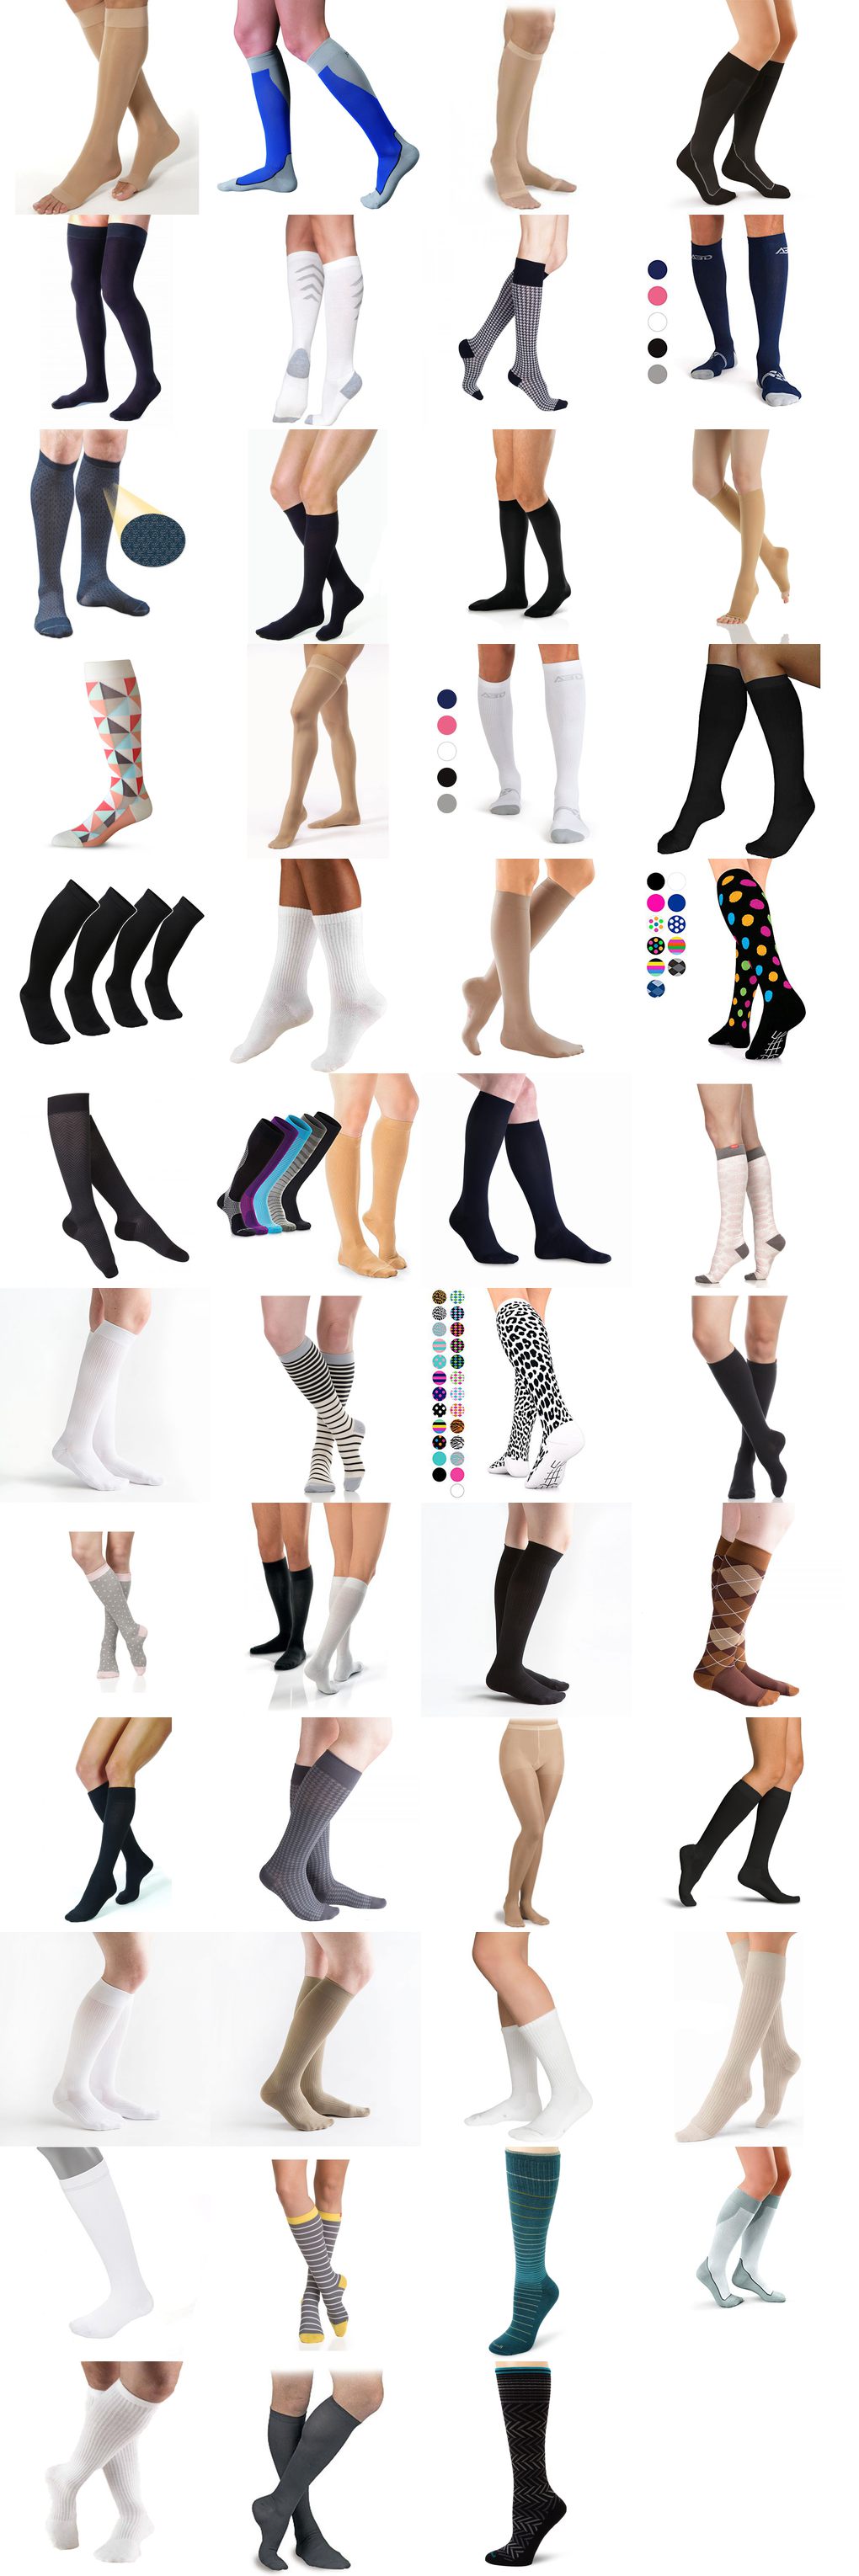 15-20 mmhg compression socks